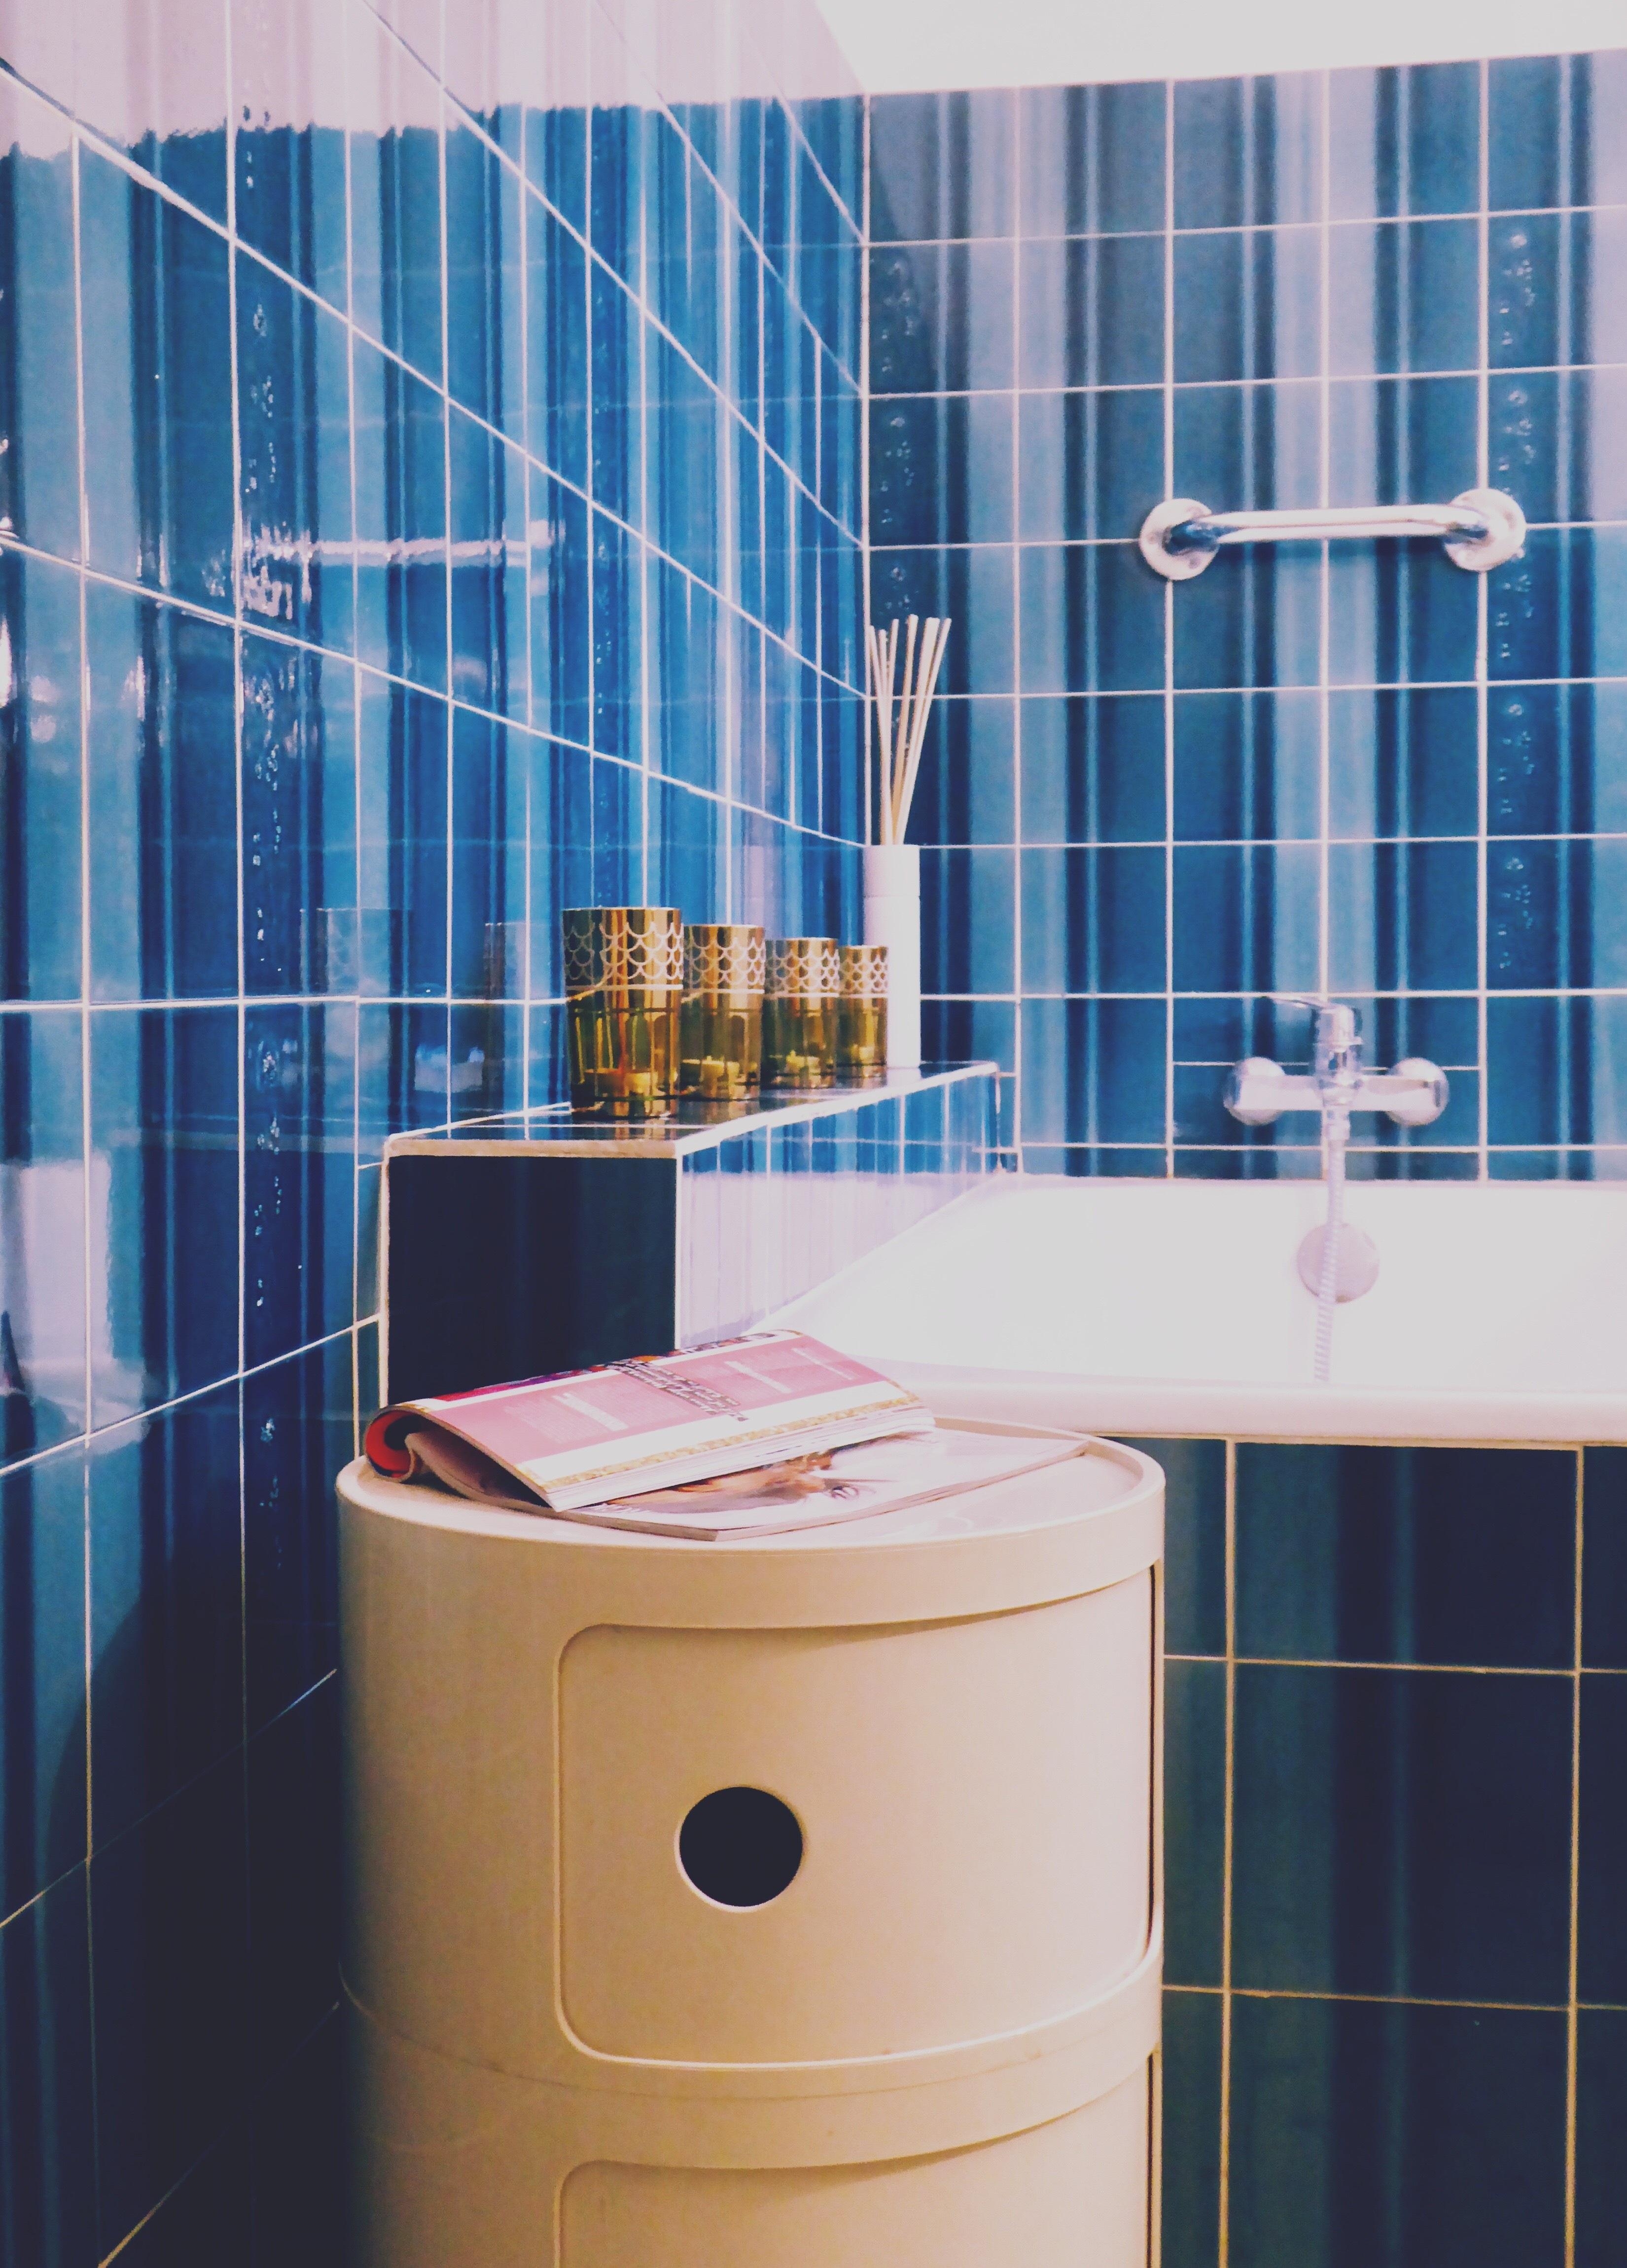 Blue Mood Bathroom
#badezimmerdeko #Vintage #interiorinspo #blau #COUCHstyle #COUCHmagazin